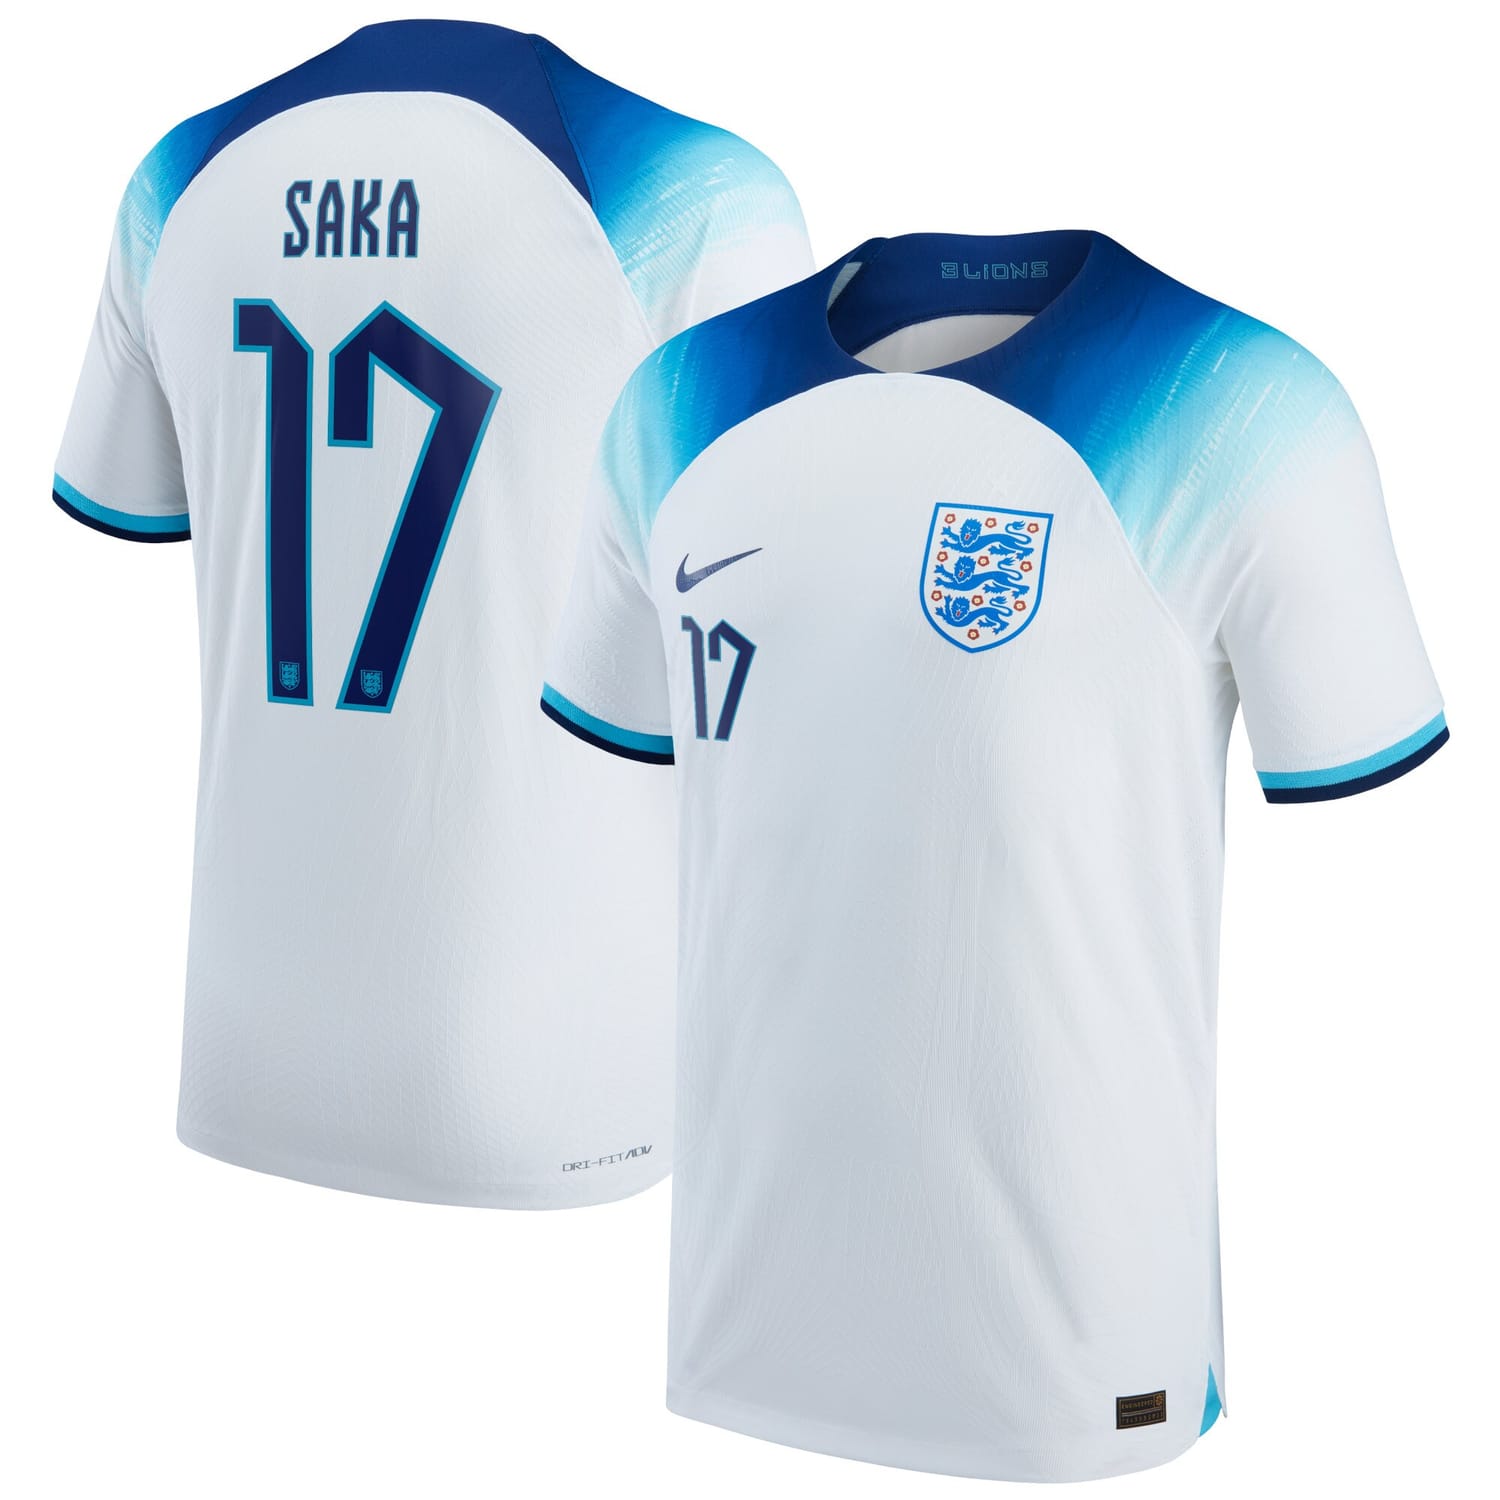 England National Team Home Authentic Jersey Shirt 2022 player Bukayo Saka 17 printing for Men